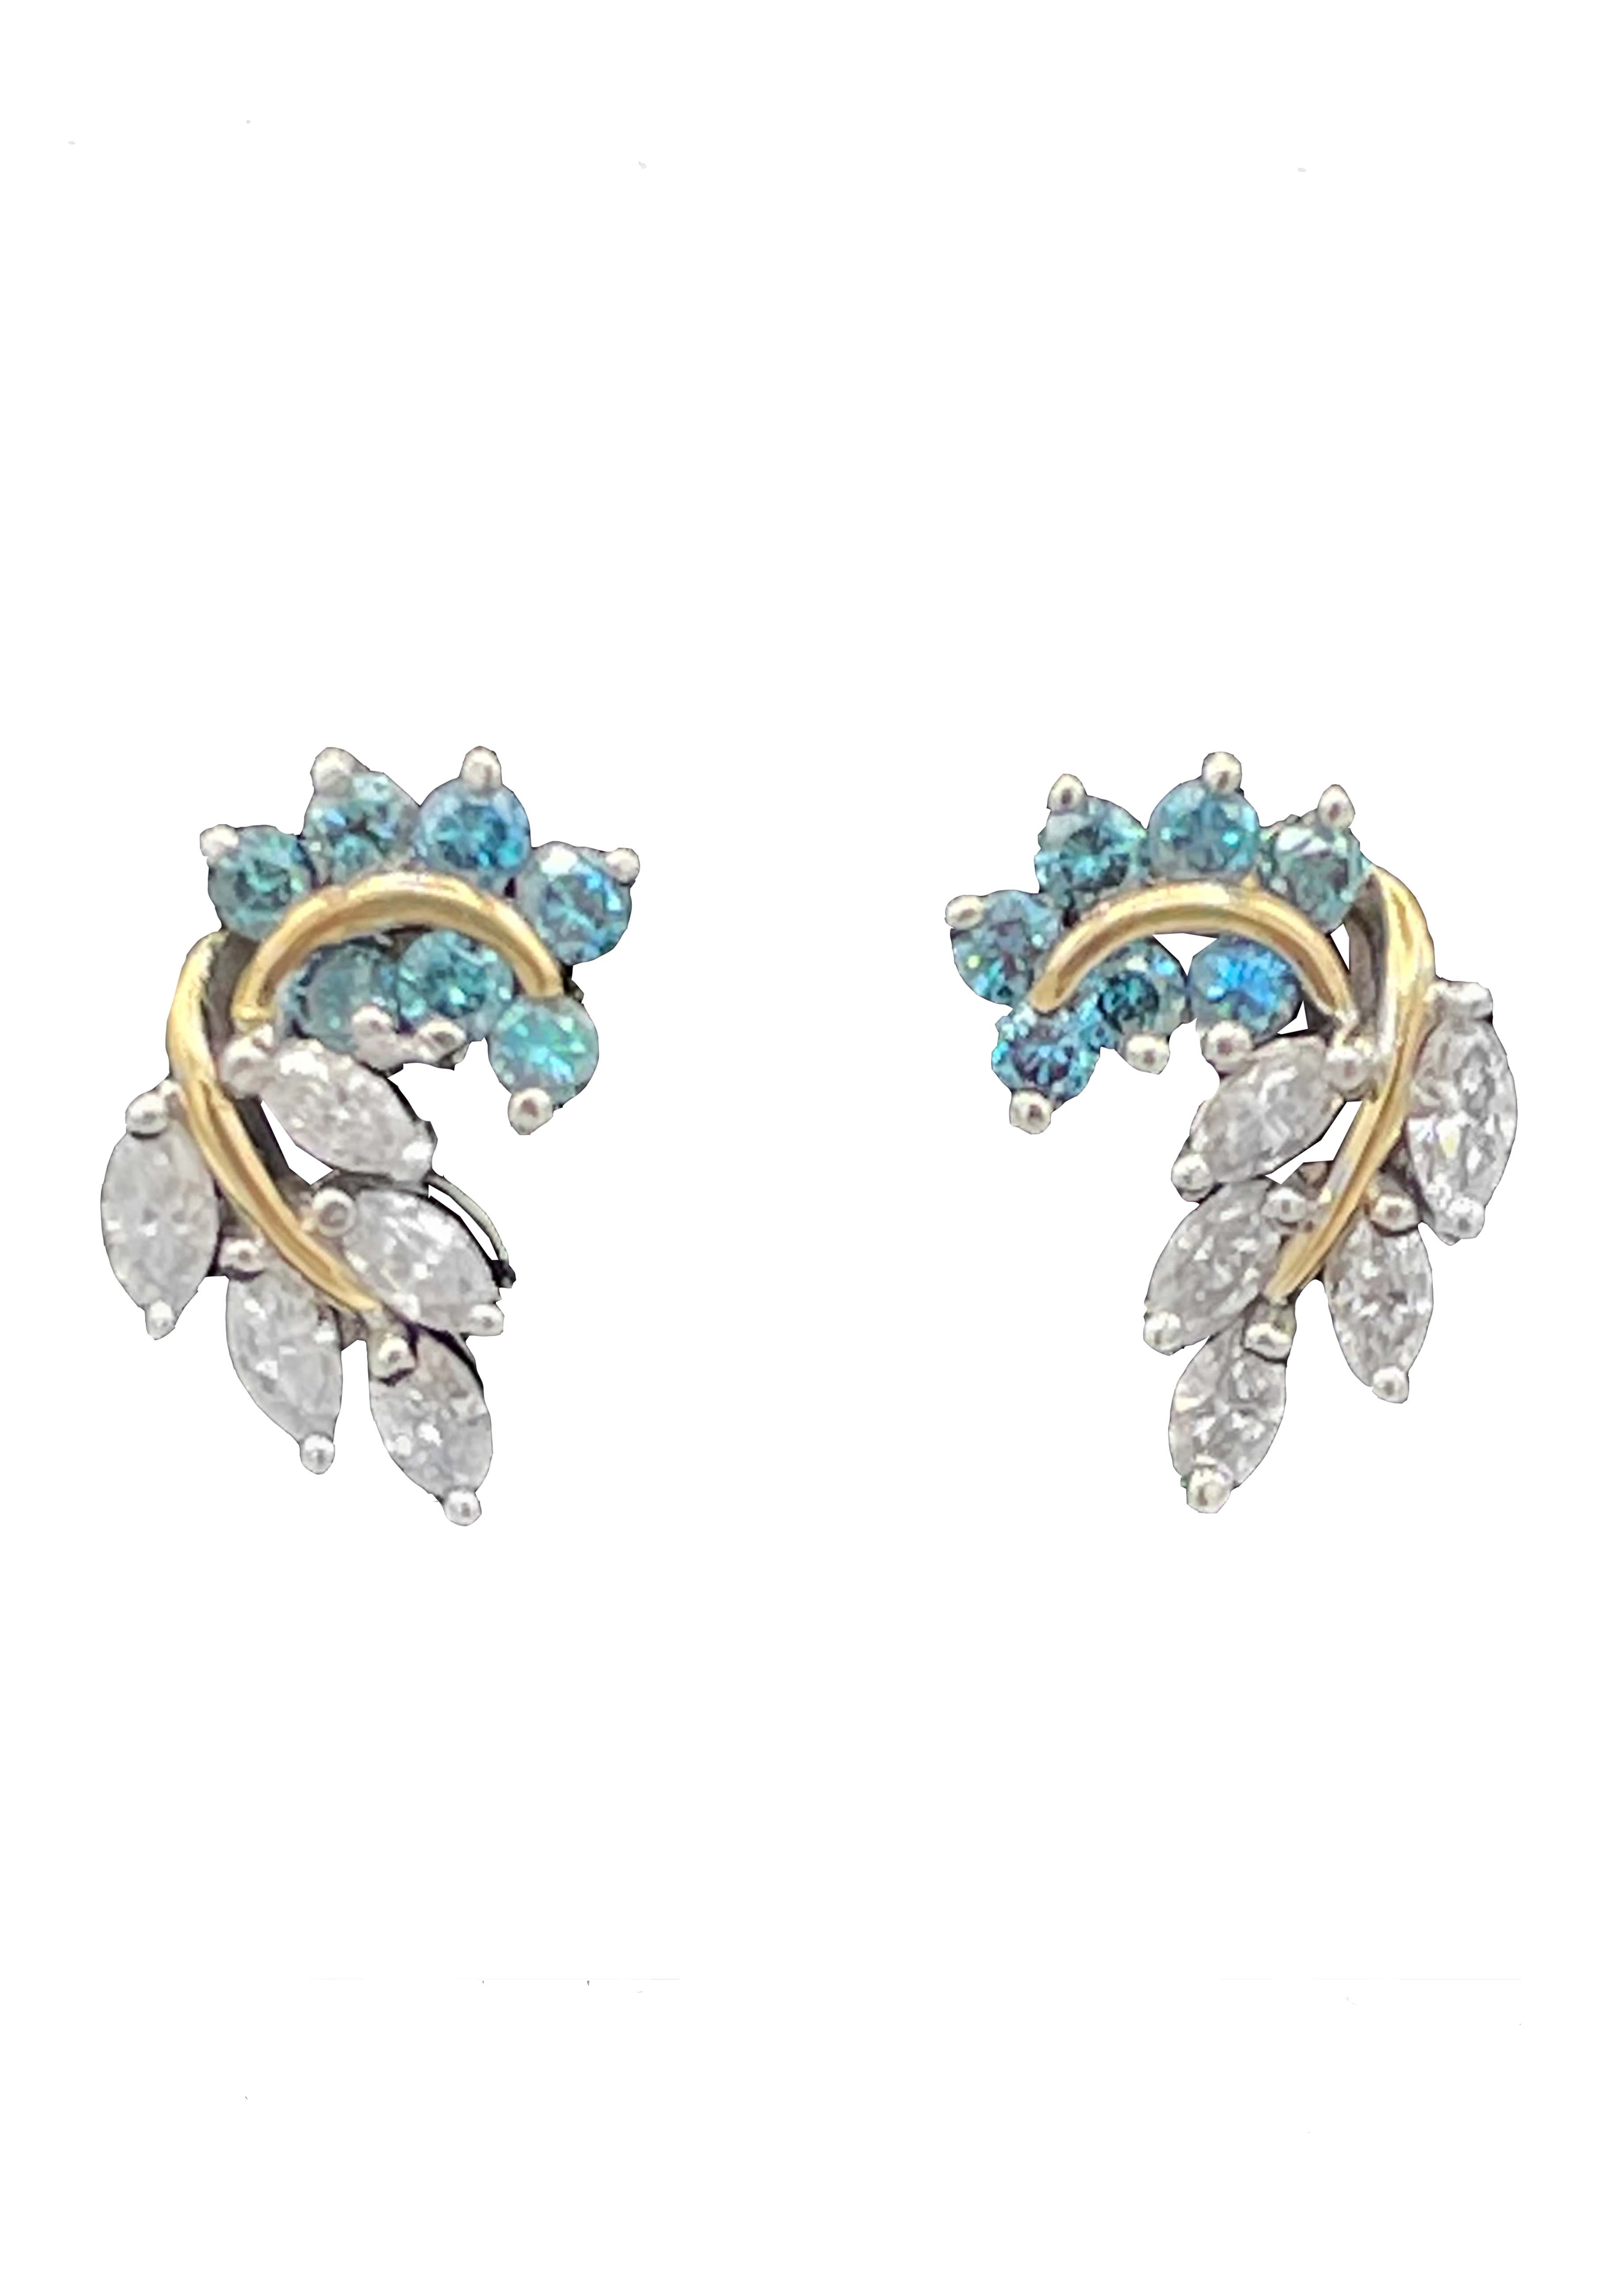 18k White and Yellow Gold Diamond Stud Earrings Image